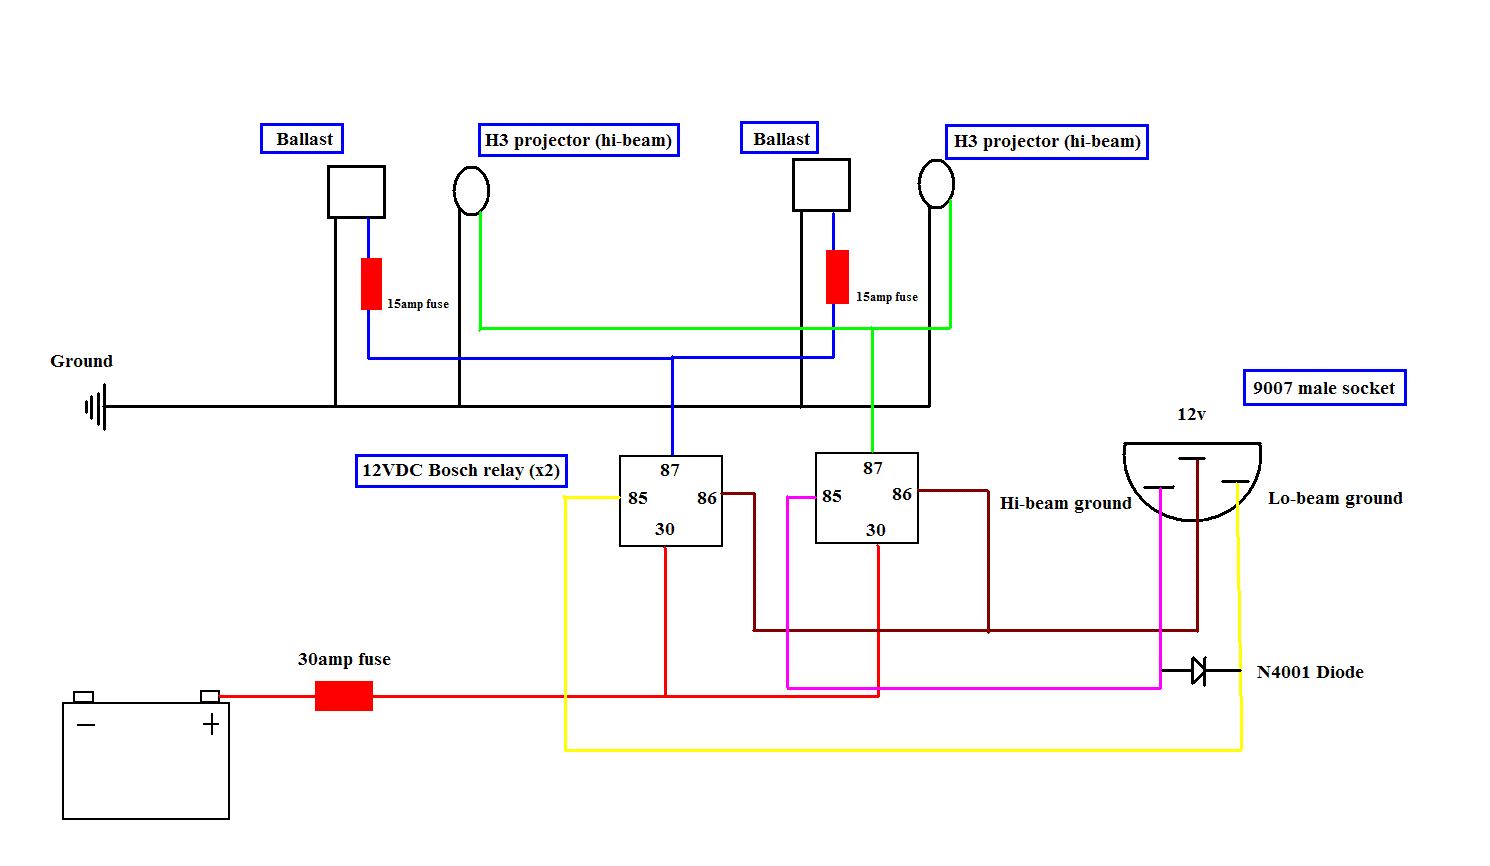 headlight wiring diagram - SaturnFans.com Forums quad headlight wiring diagram 